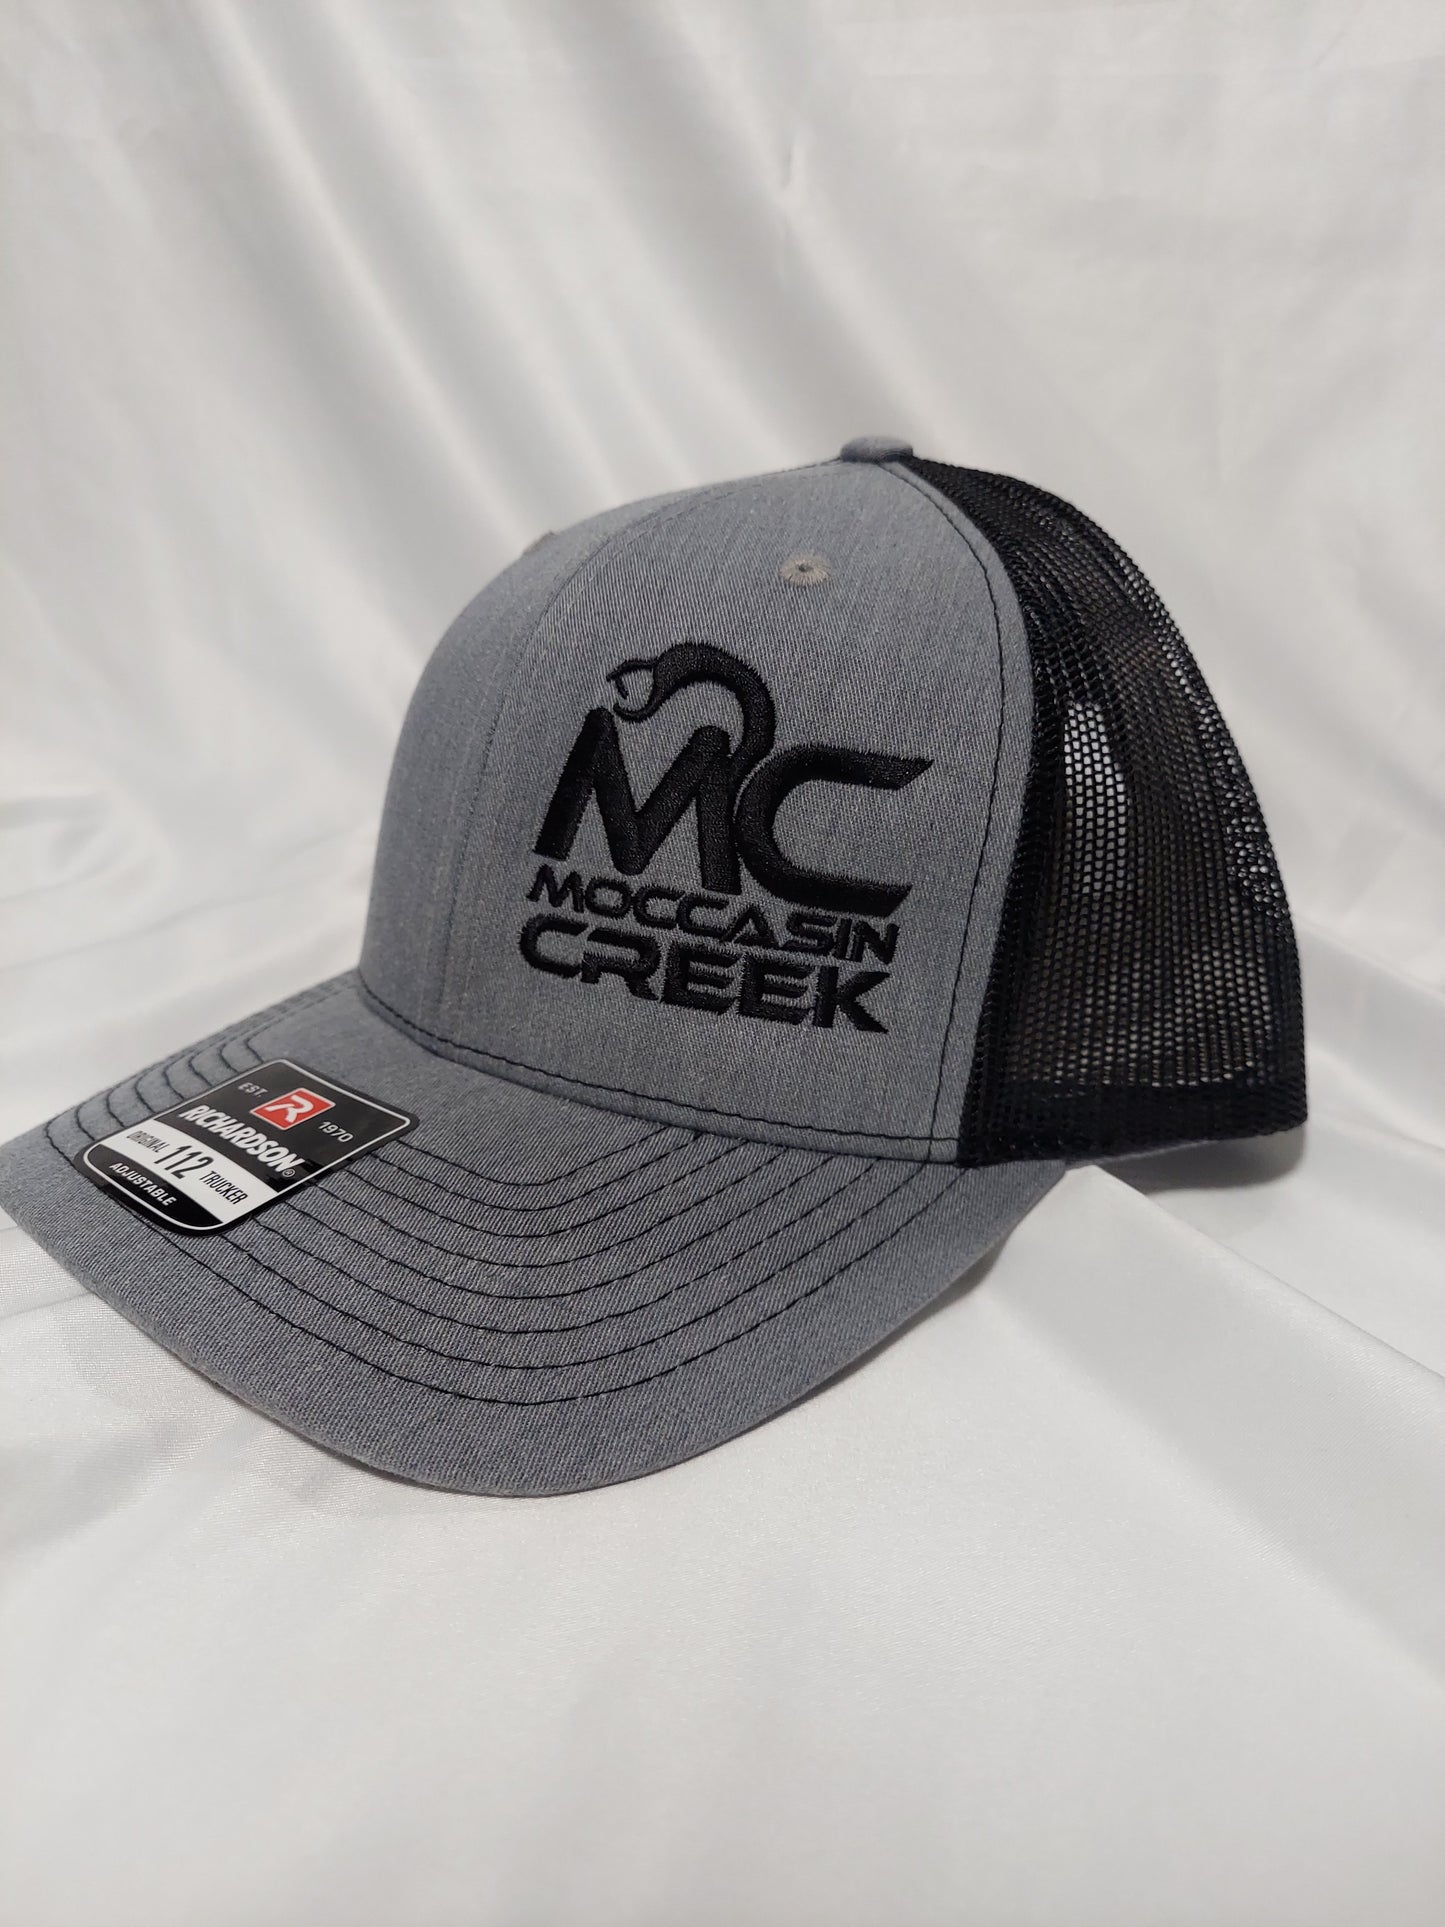 Moccasin Creek Caps